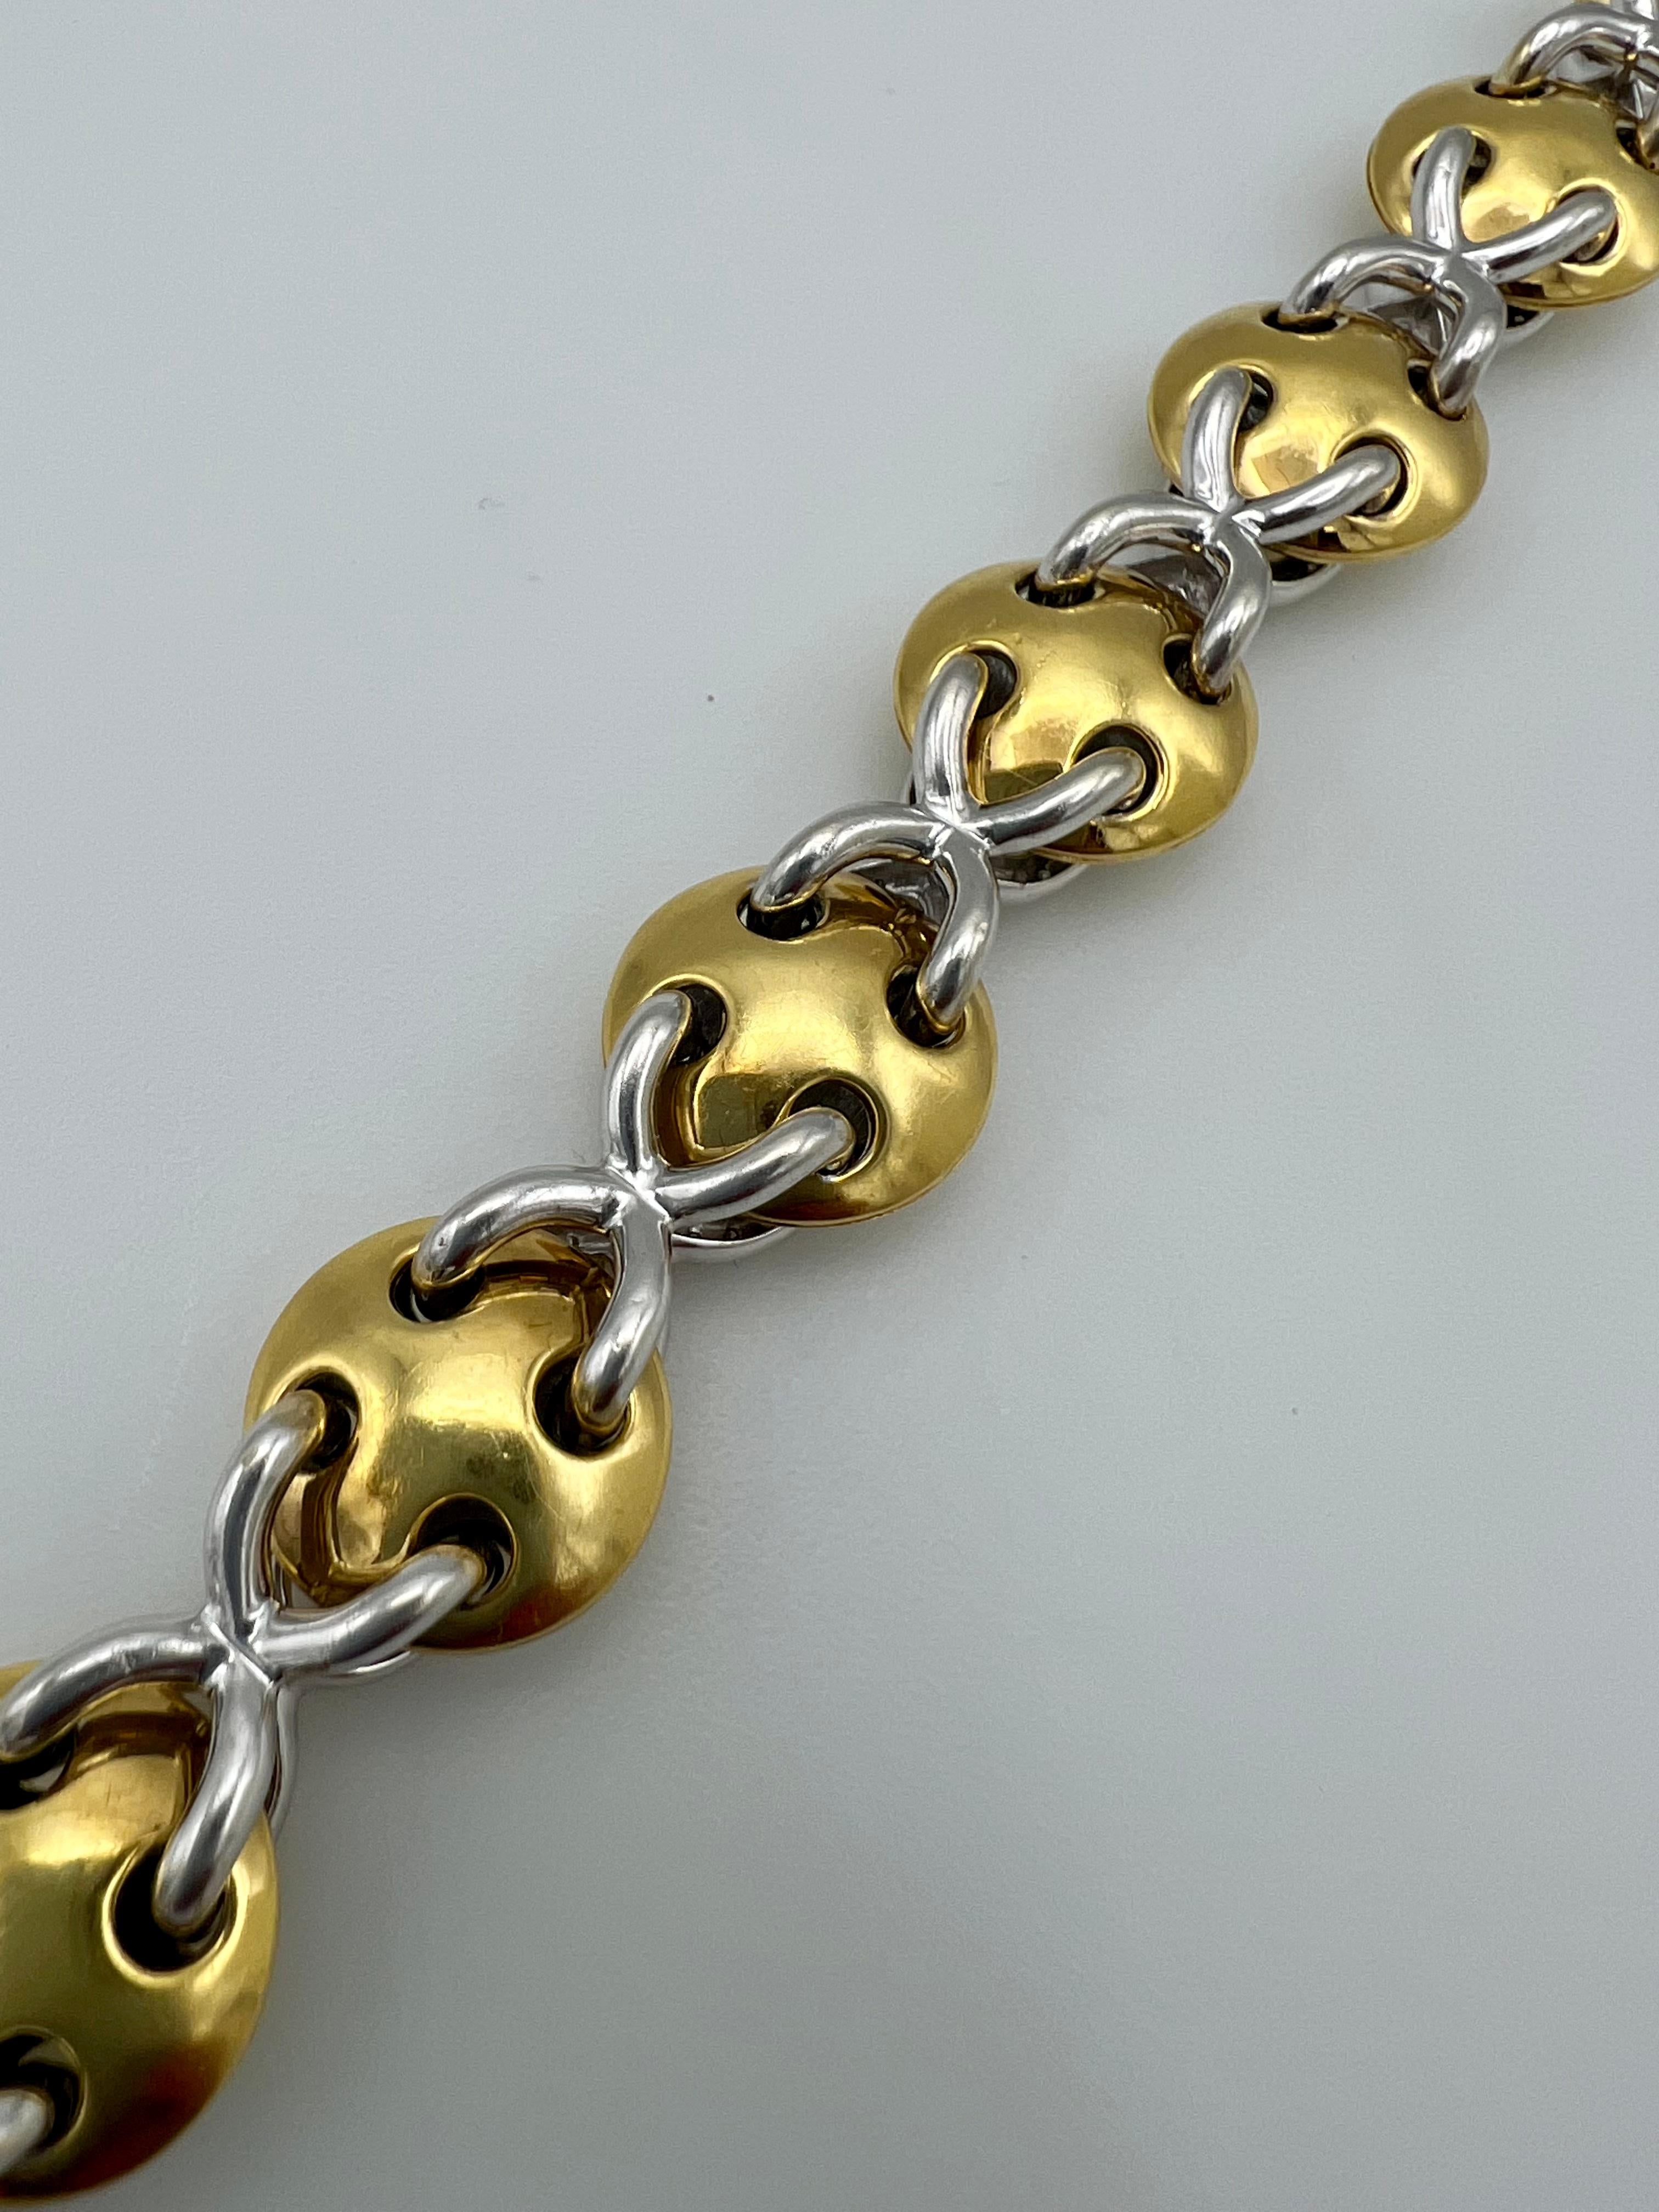 - The bracelet features “X” motif link
- 18 karat yellow and 18 karat white gold
- 1.80 carat of round brilliant cut diamonds

Hallmarks: 750
Total weight: 58.5 grams
Measurements: 7.5” long  